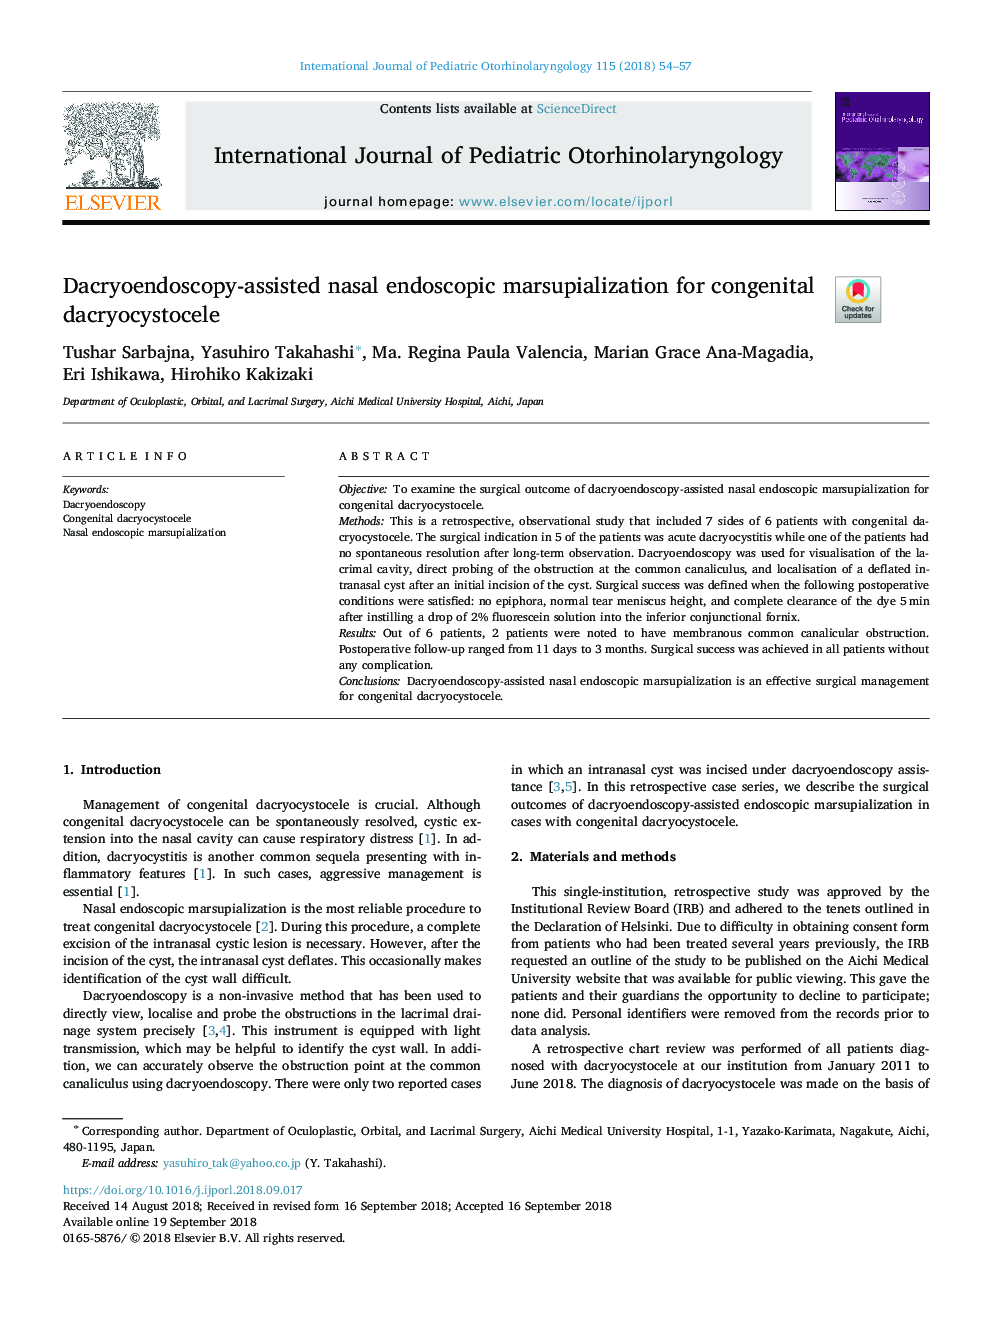 Dacryoendoscopy-assisted nasal endoscopic marsupialization for congenital dacryocystocele